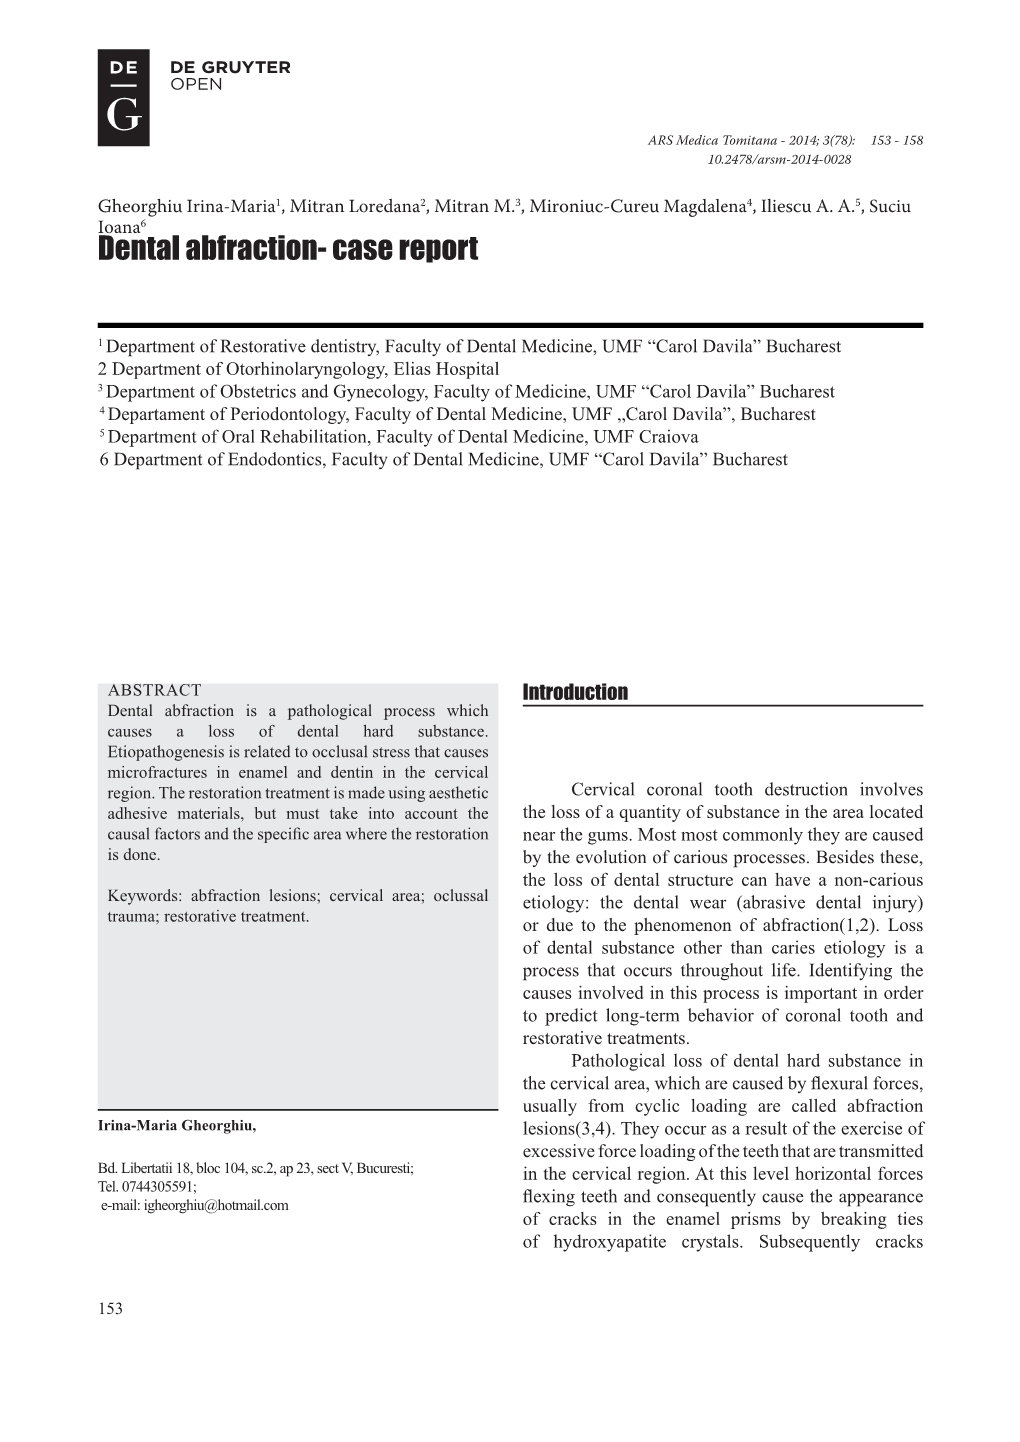 Dental Abfraction- Case Report